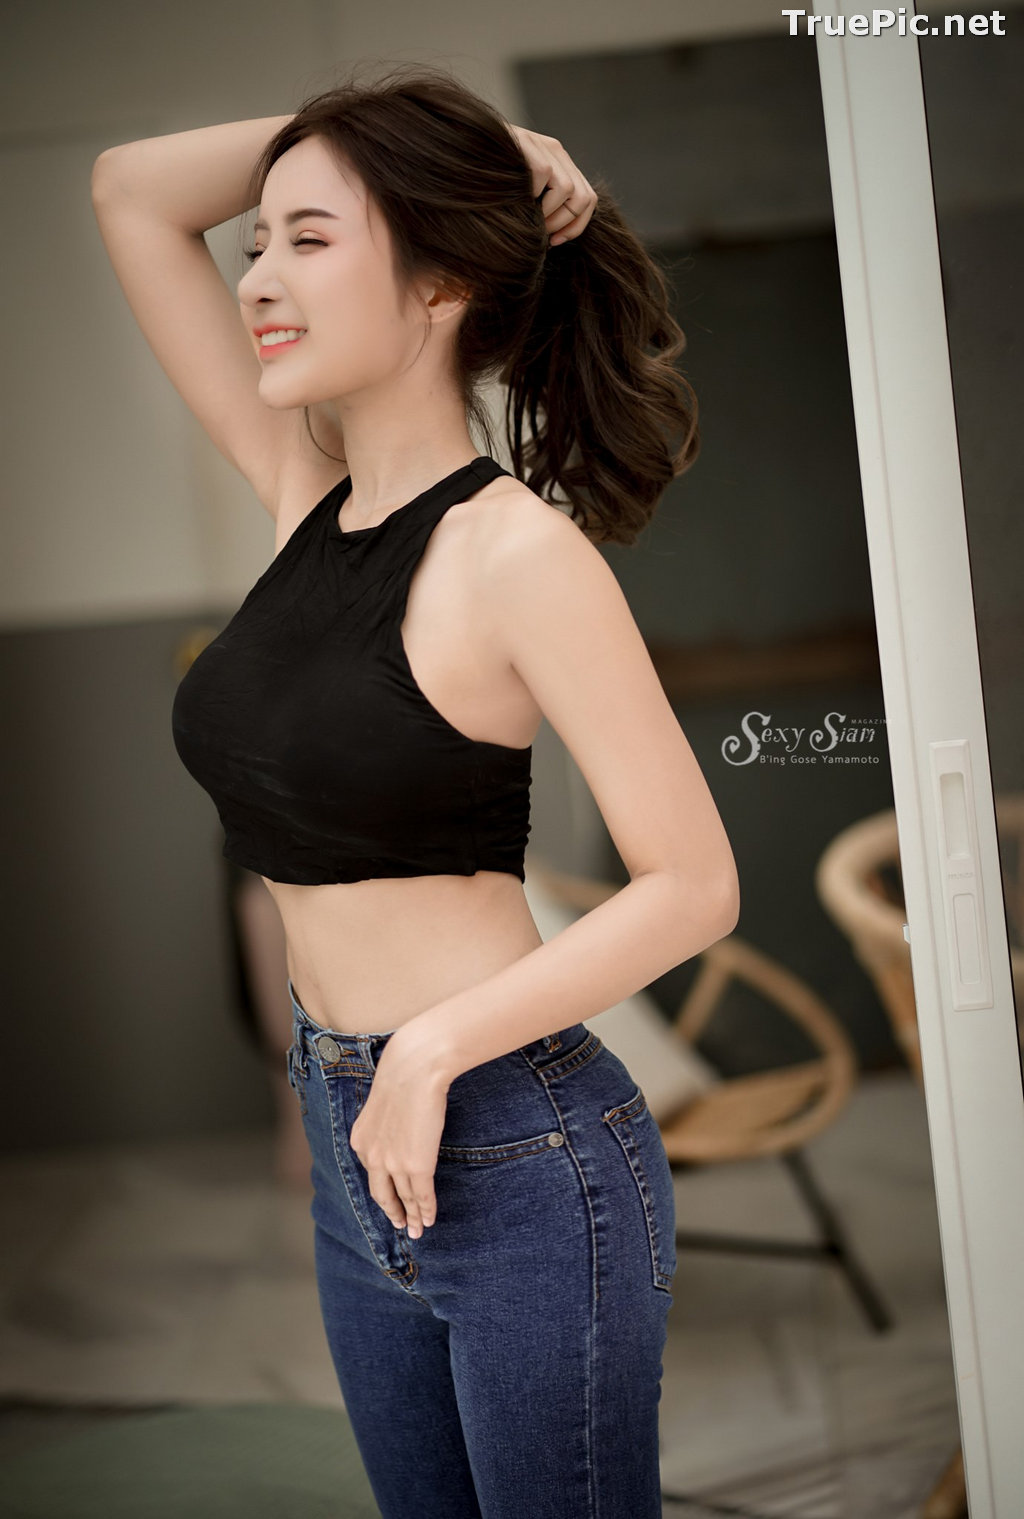 Image Thailand Model - Thanyarat Charoenpornkittada - Black Crop Top and Jean - TruePic.net - Picture-2